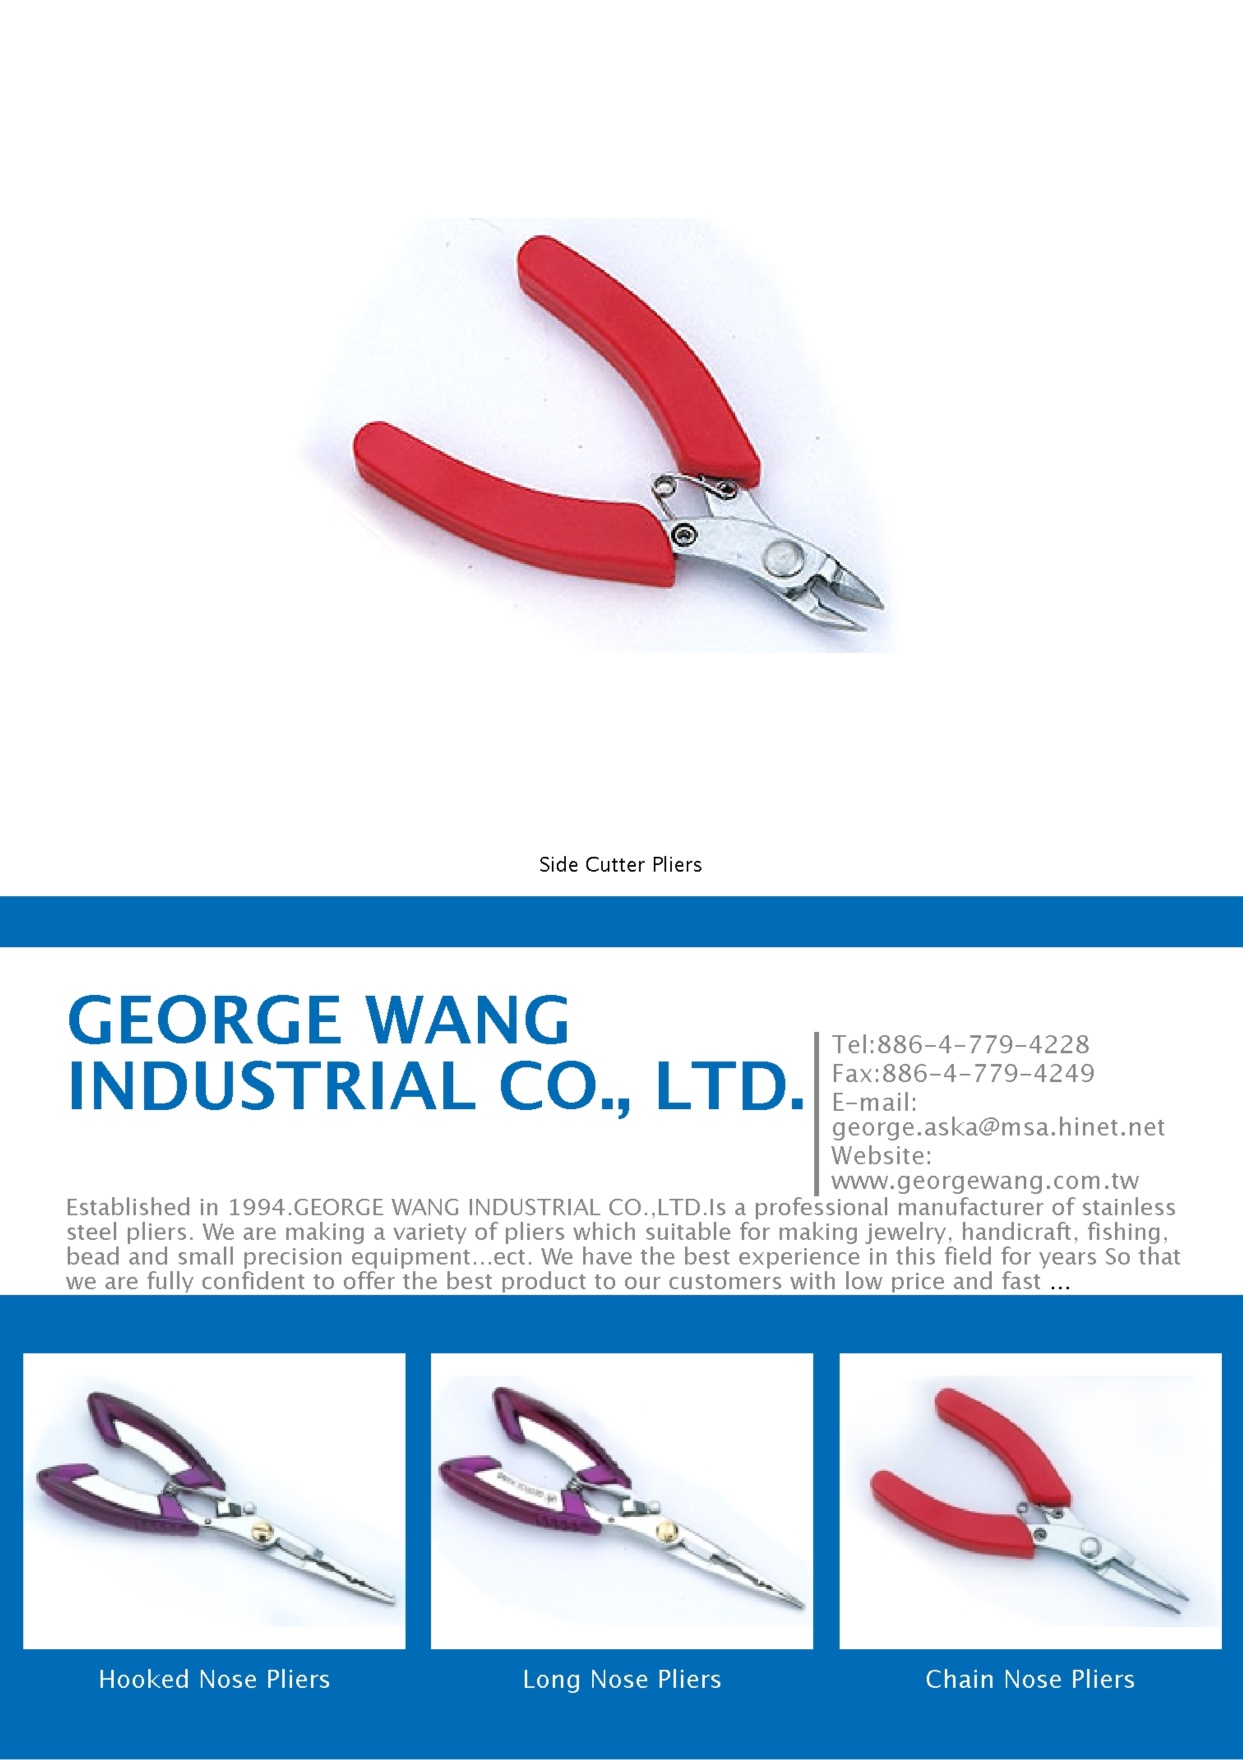 GEORGE WANG INDUSTRIAL CO., LTD.